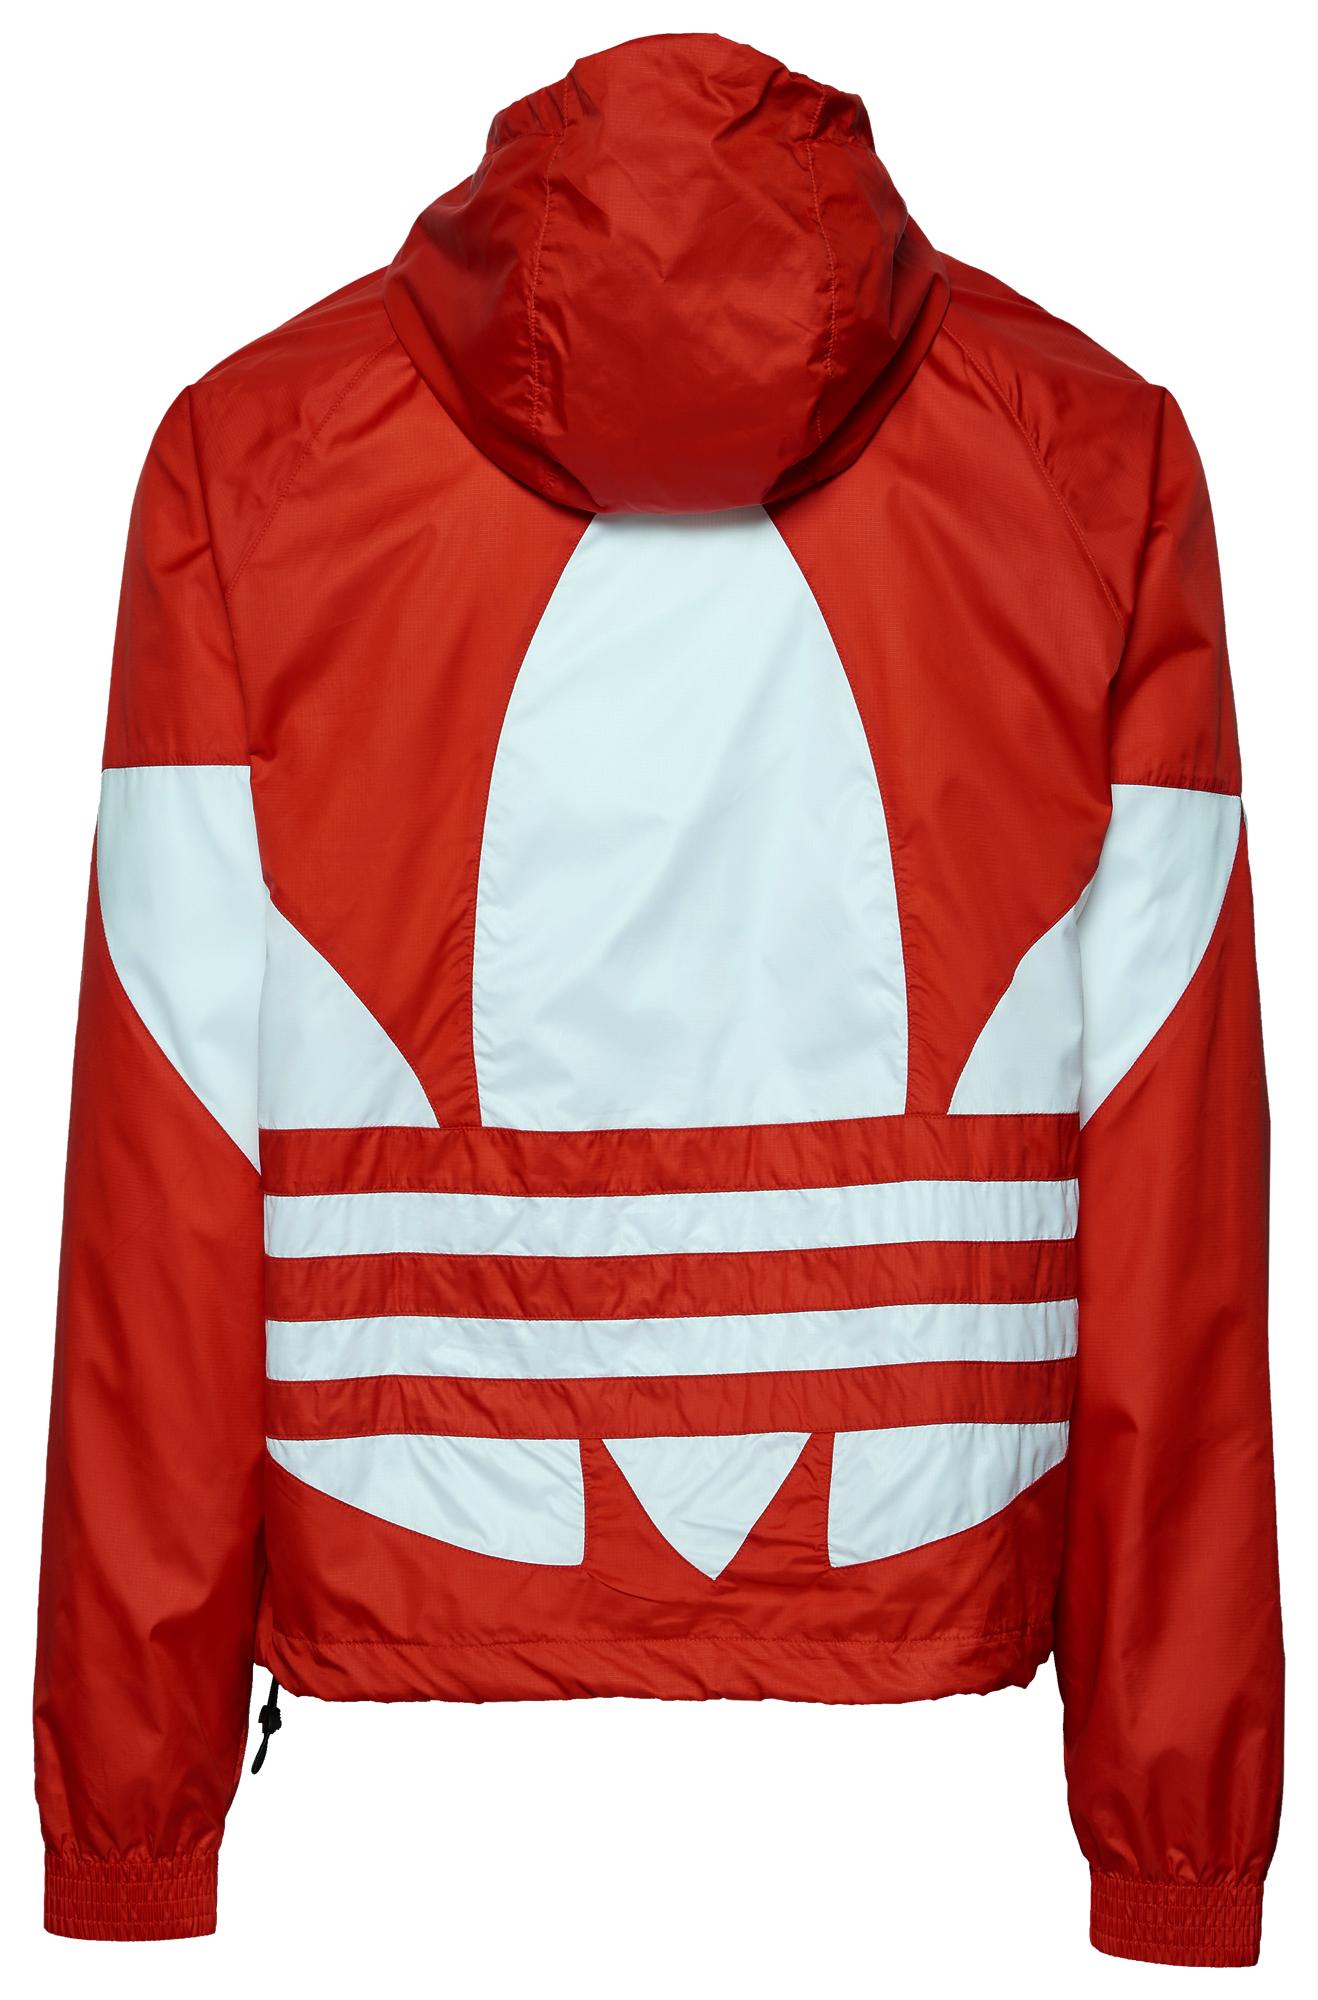 adidas Originals Synthetic Big Trefoil Windbreaker Jacket in Red for Men -  Lyst